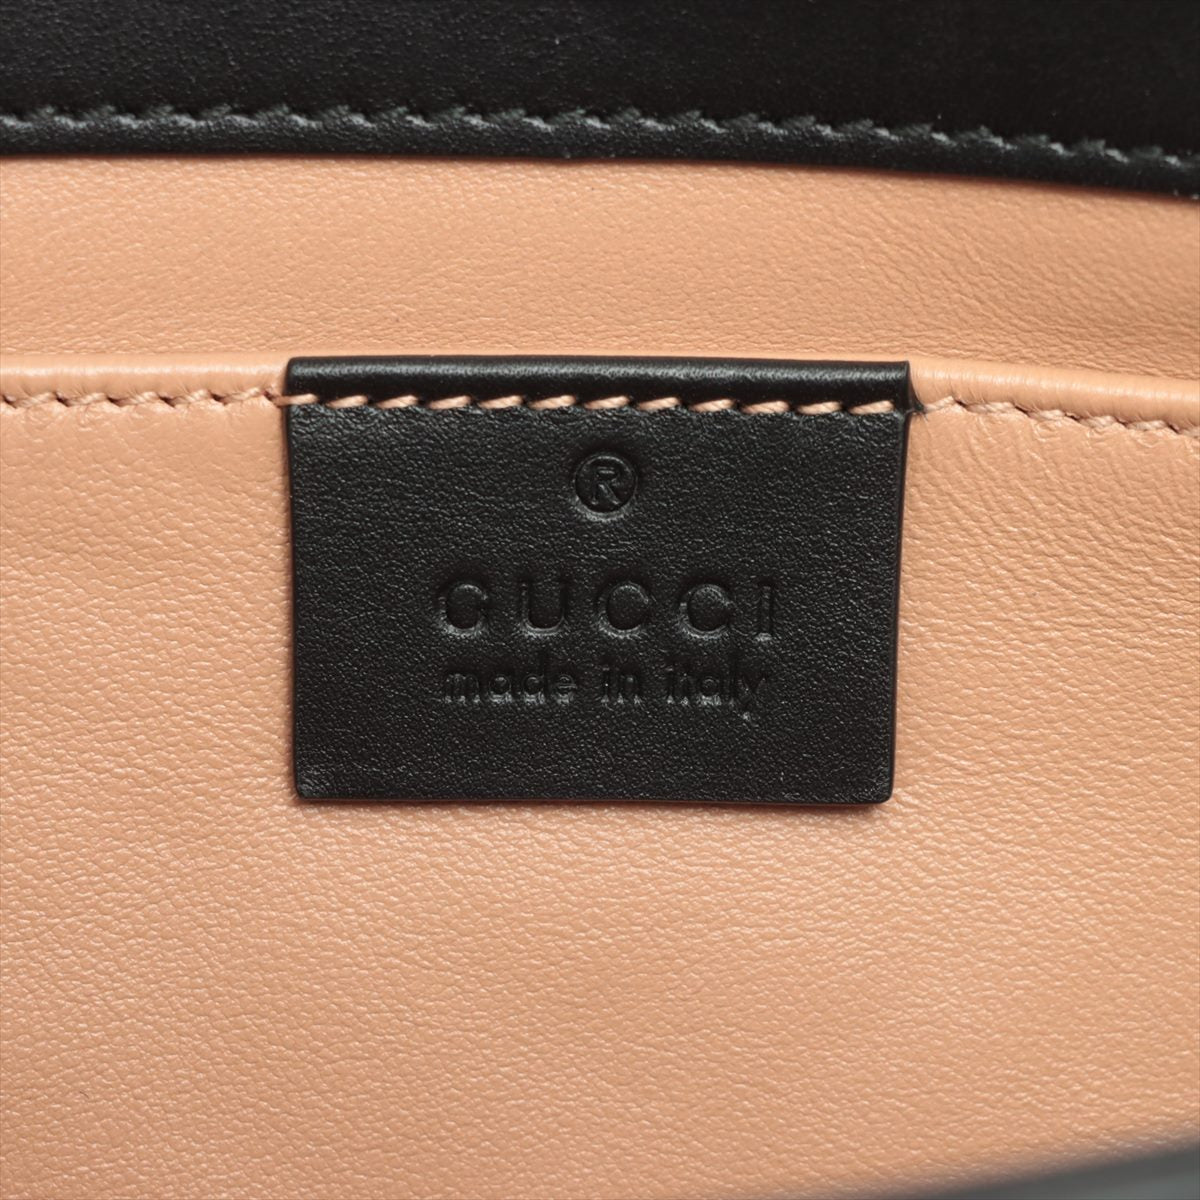 Gucci Raja Broadway Leather Clutch bag Black 576532